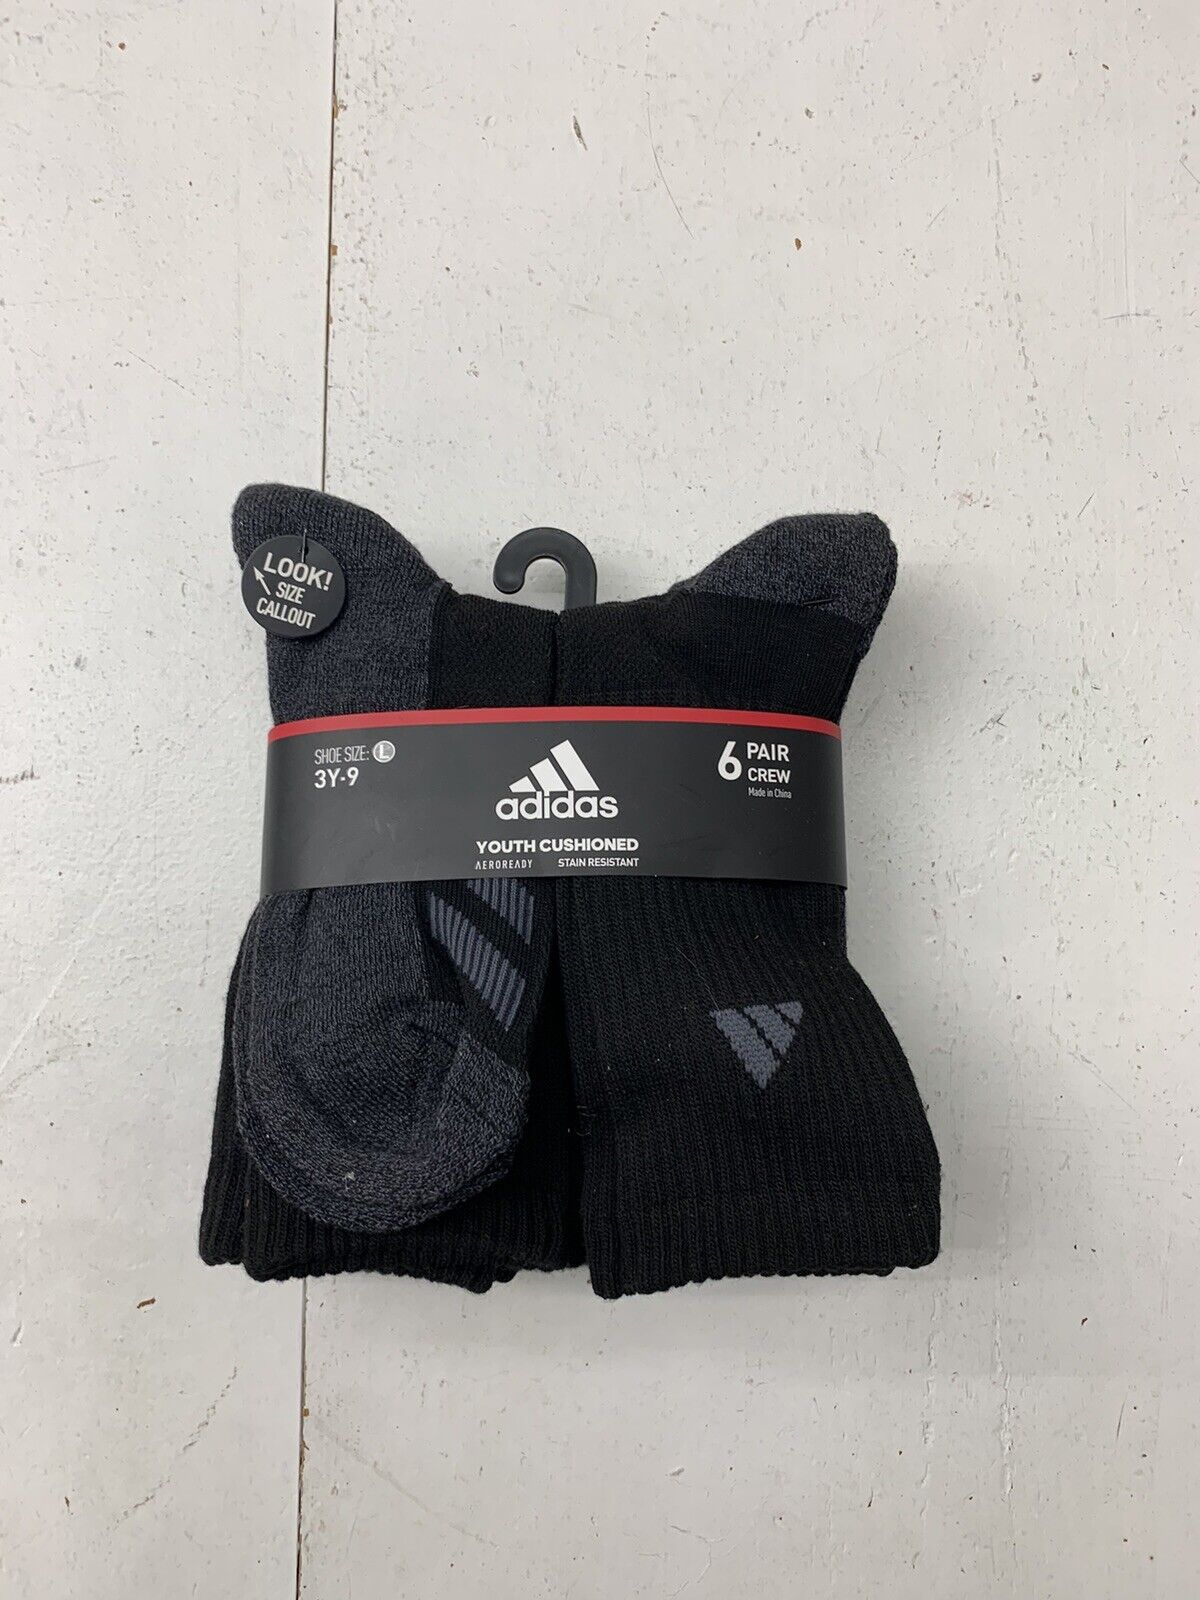 Adidas Kids 6 Pair Black Crew Socks Size 3-9